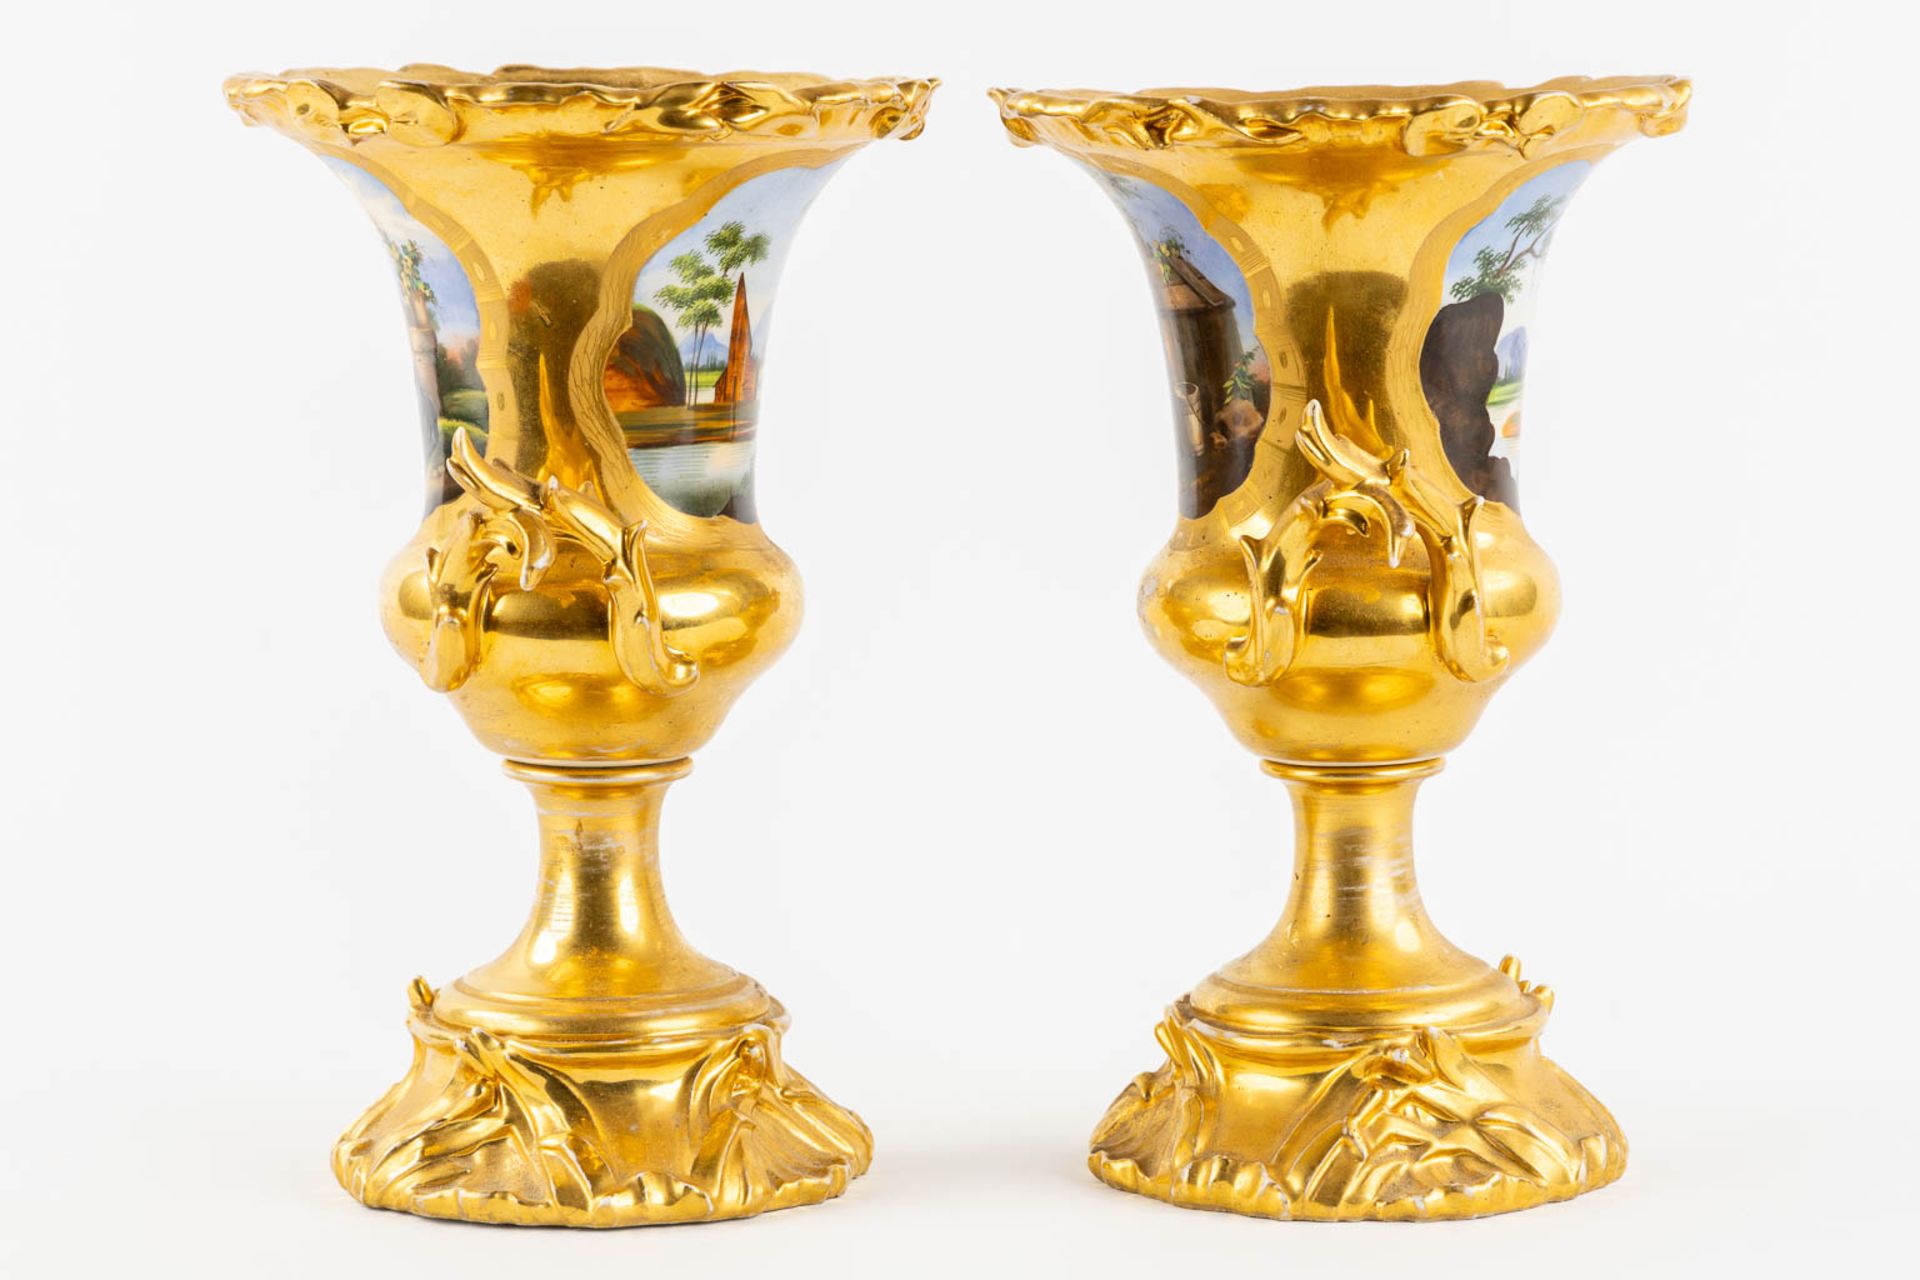 A pair of urns, Old Paris porcelain, hand-painted and gilt decor. 19th C. (H:27 x D:18 cm) - Image 6 of 14